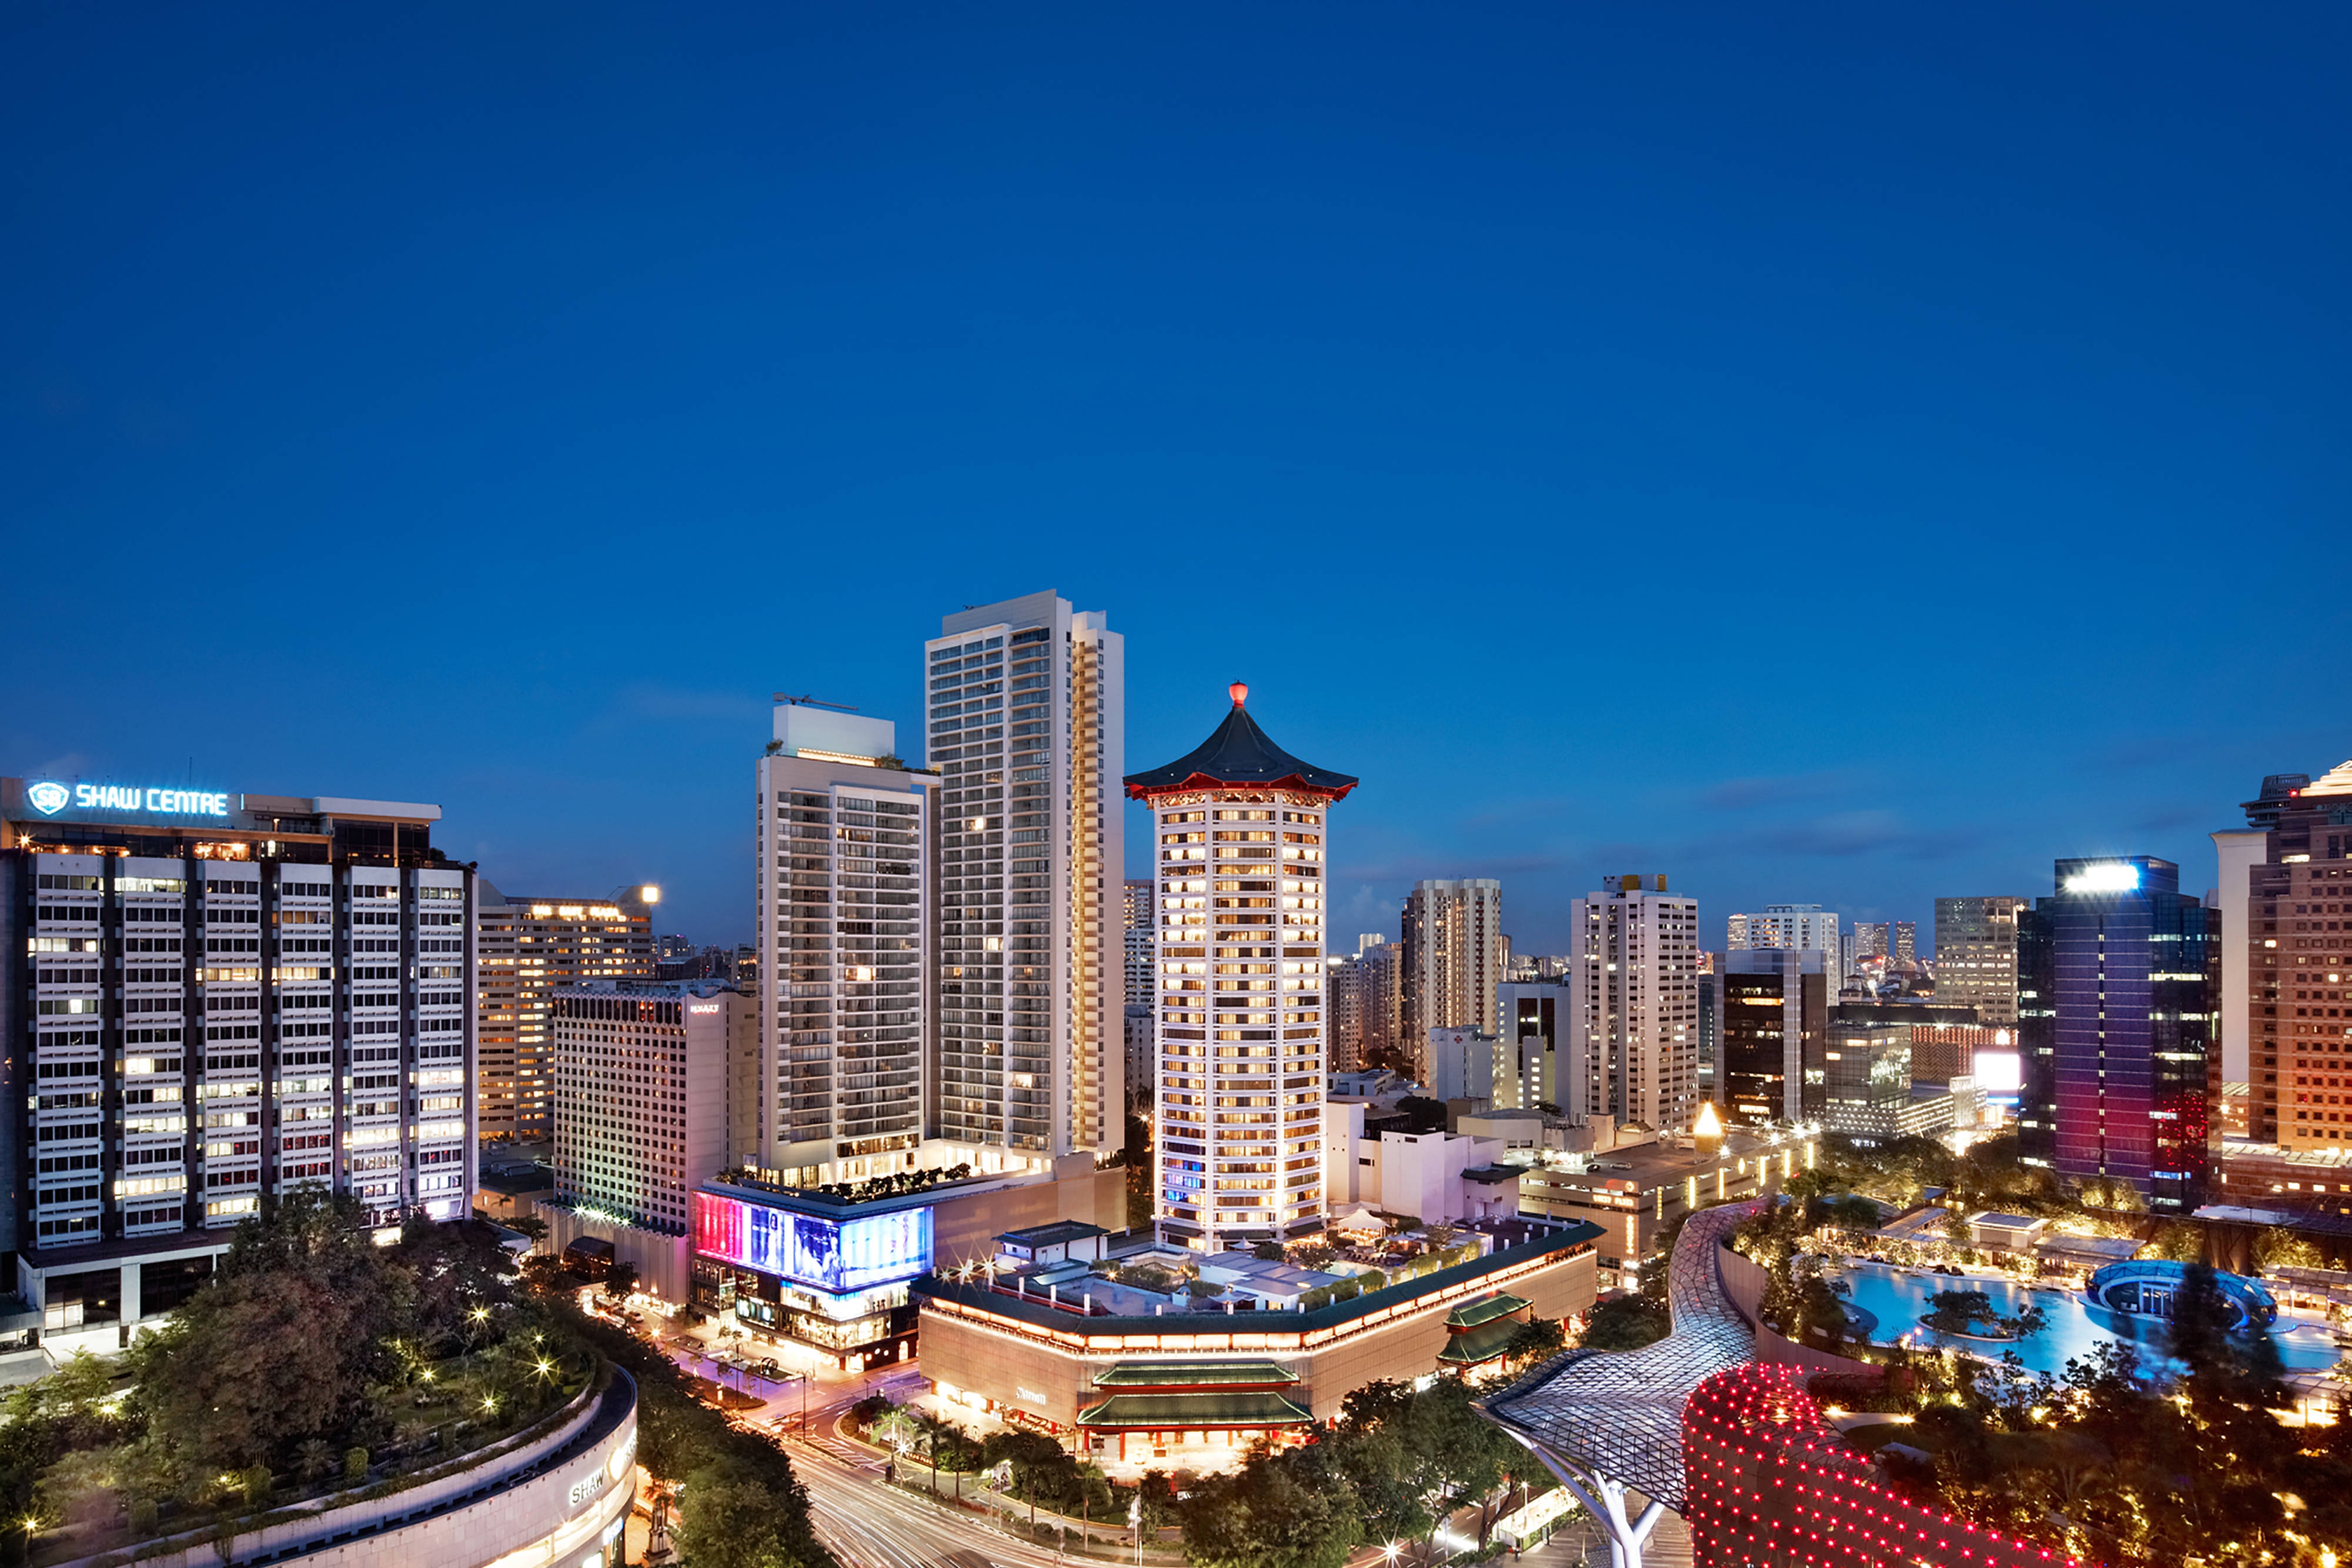 Luxury hotel in Singapore